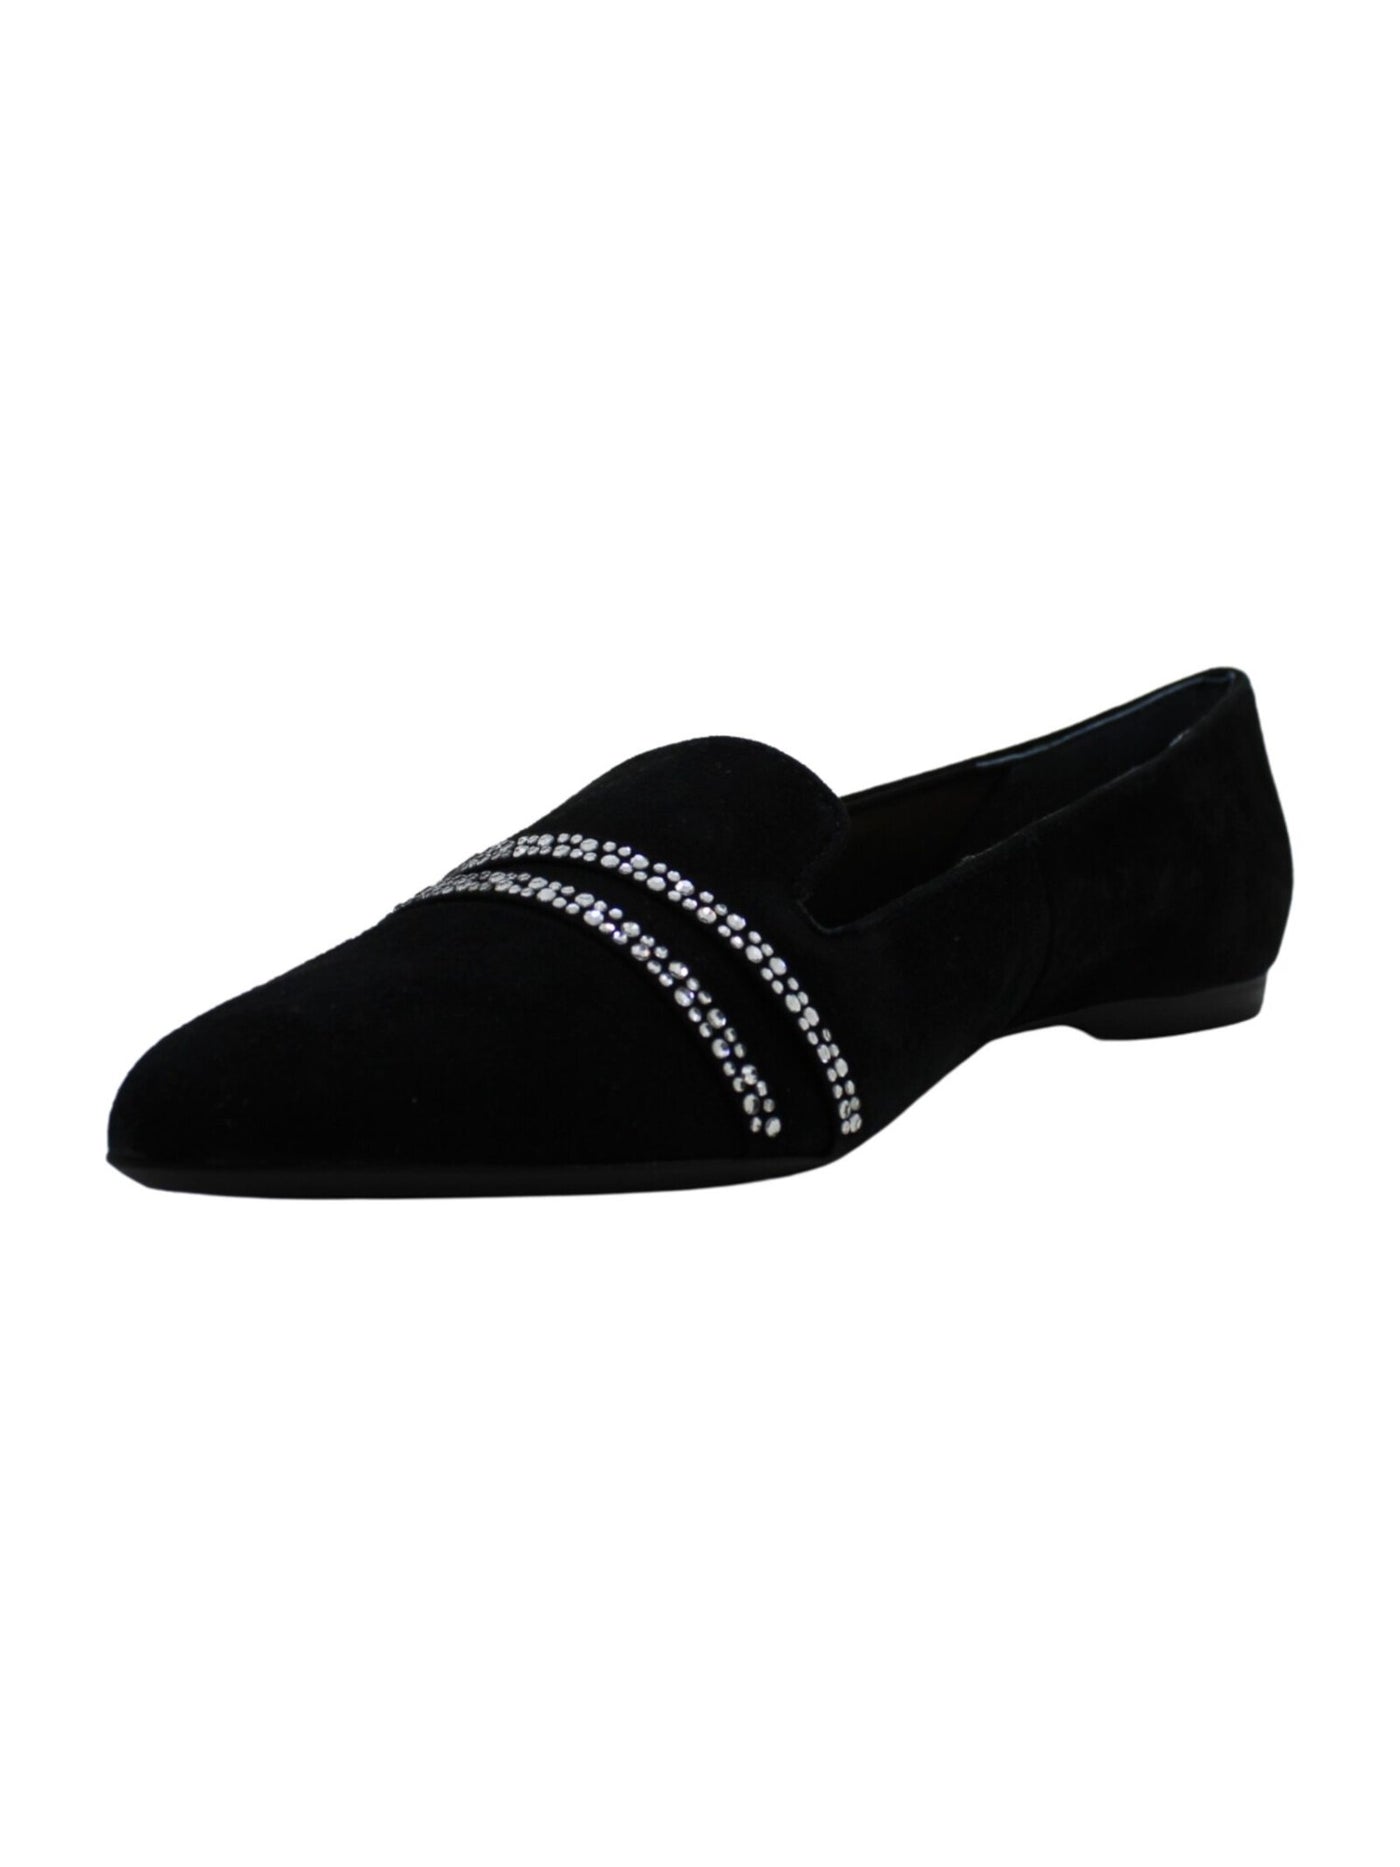 ALFANI Womens Black Step 'N Flex Technology Rhinestone Poee Pointed Toe Slip On Leather Loafers Shoes M